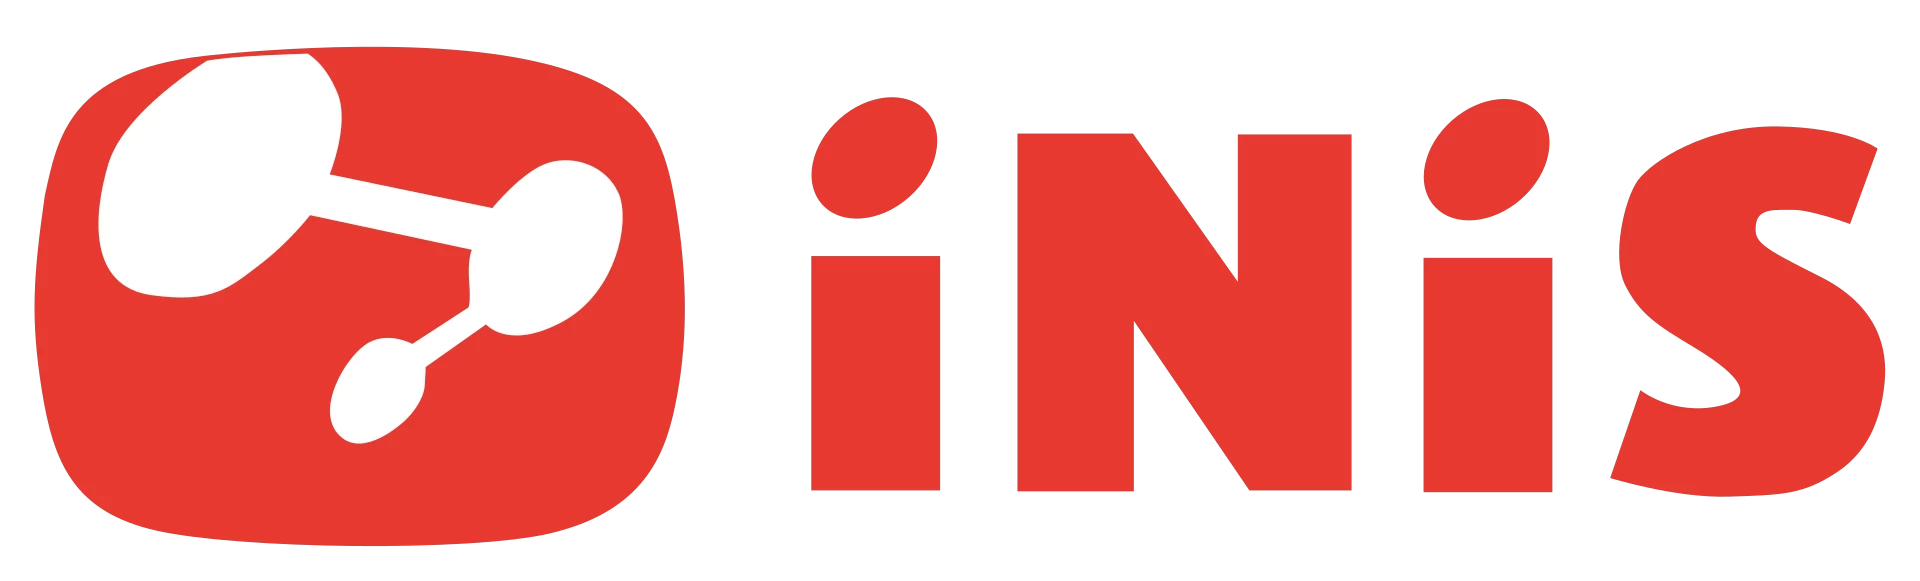 iNiS corporation logo